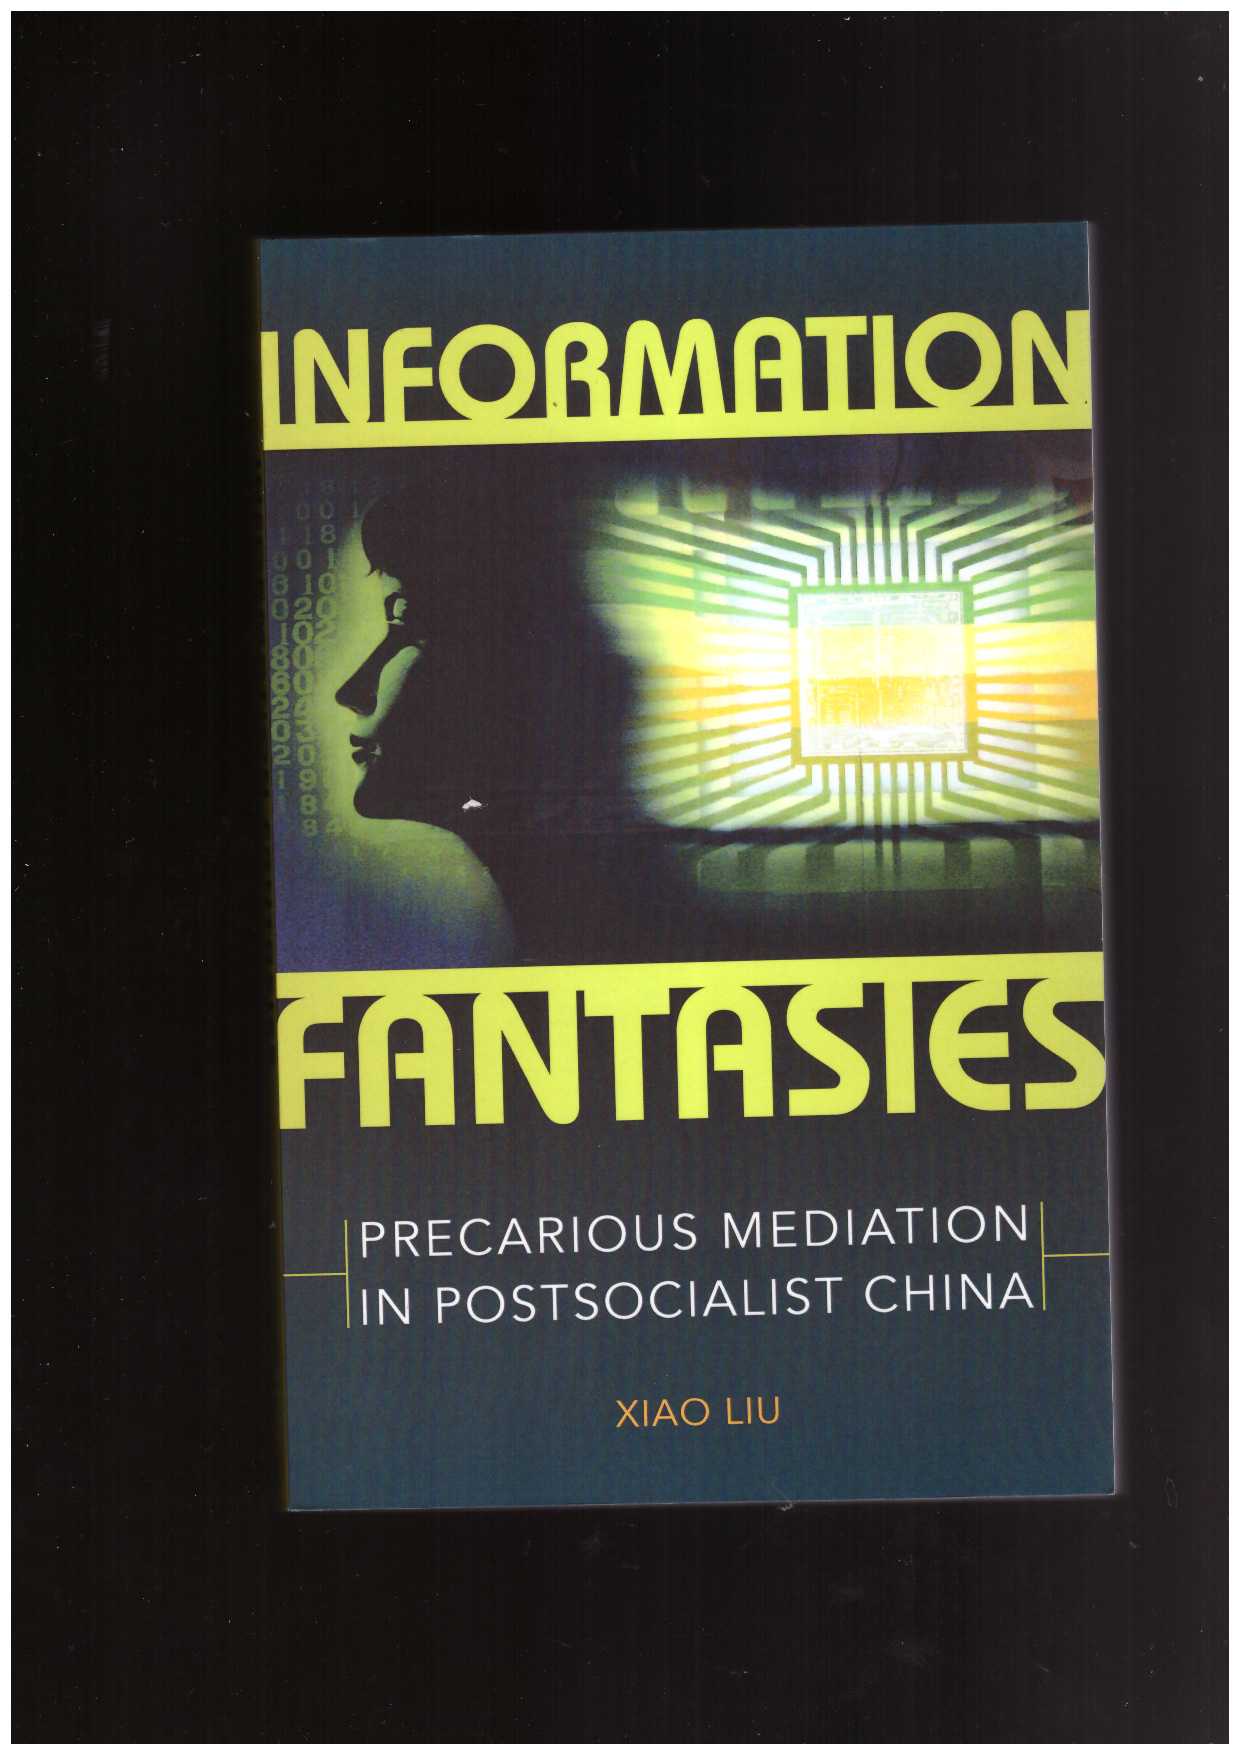 LIU, Xio - Information Fantasies - Precarious Mediation in Postsocialist China